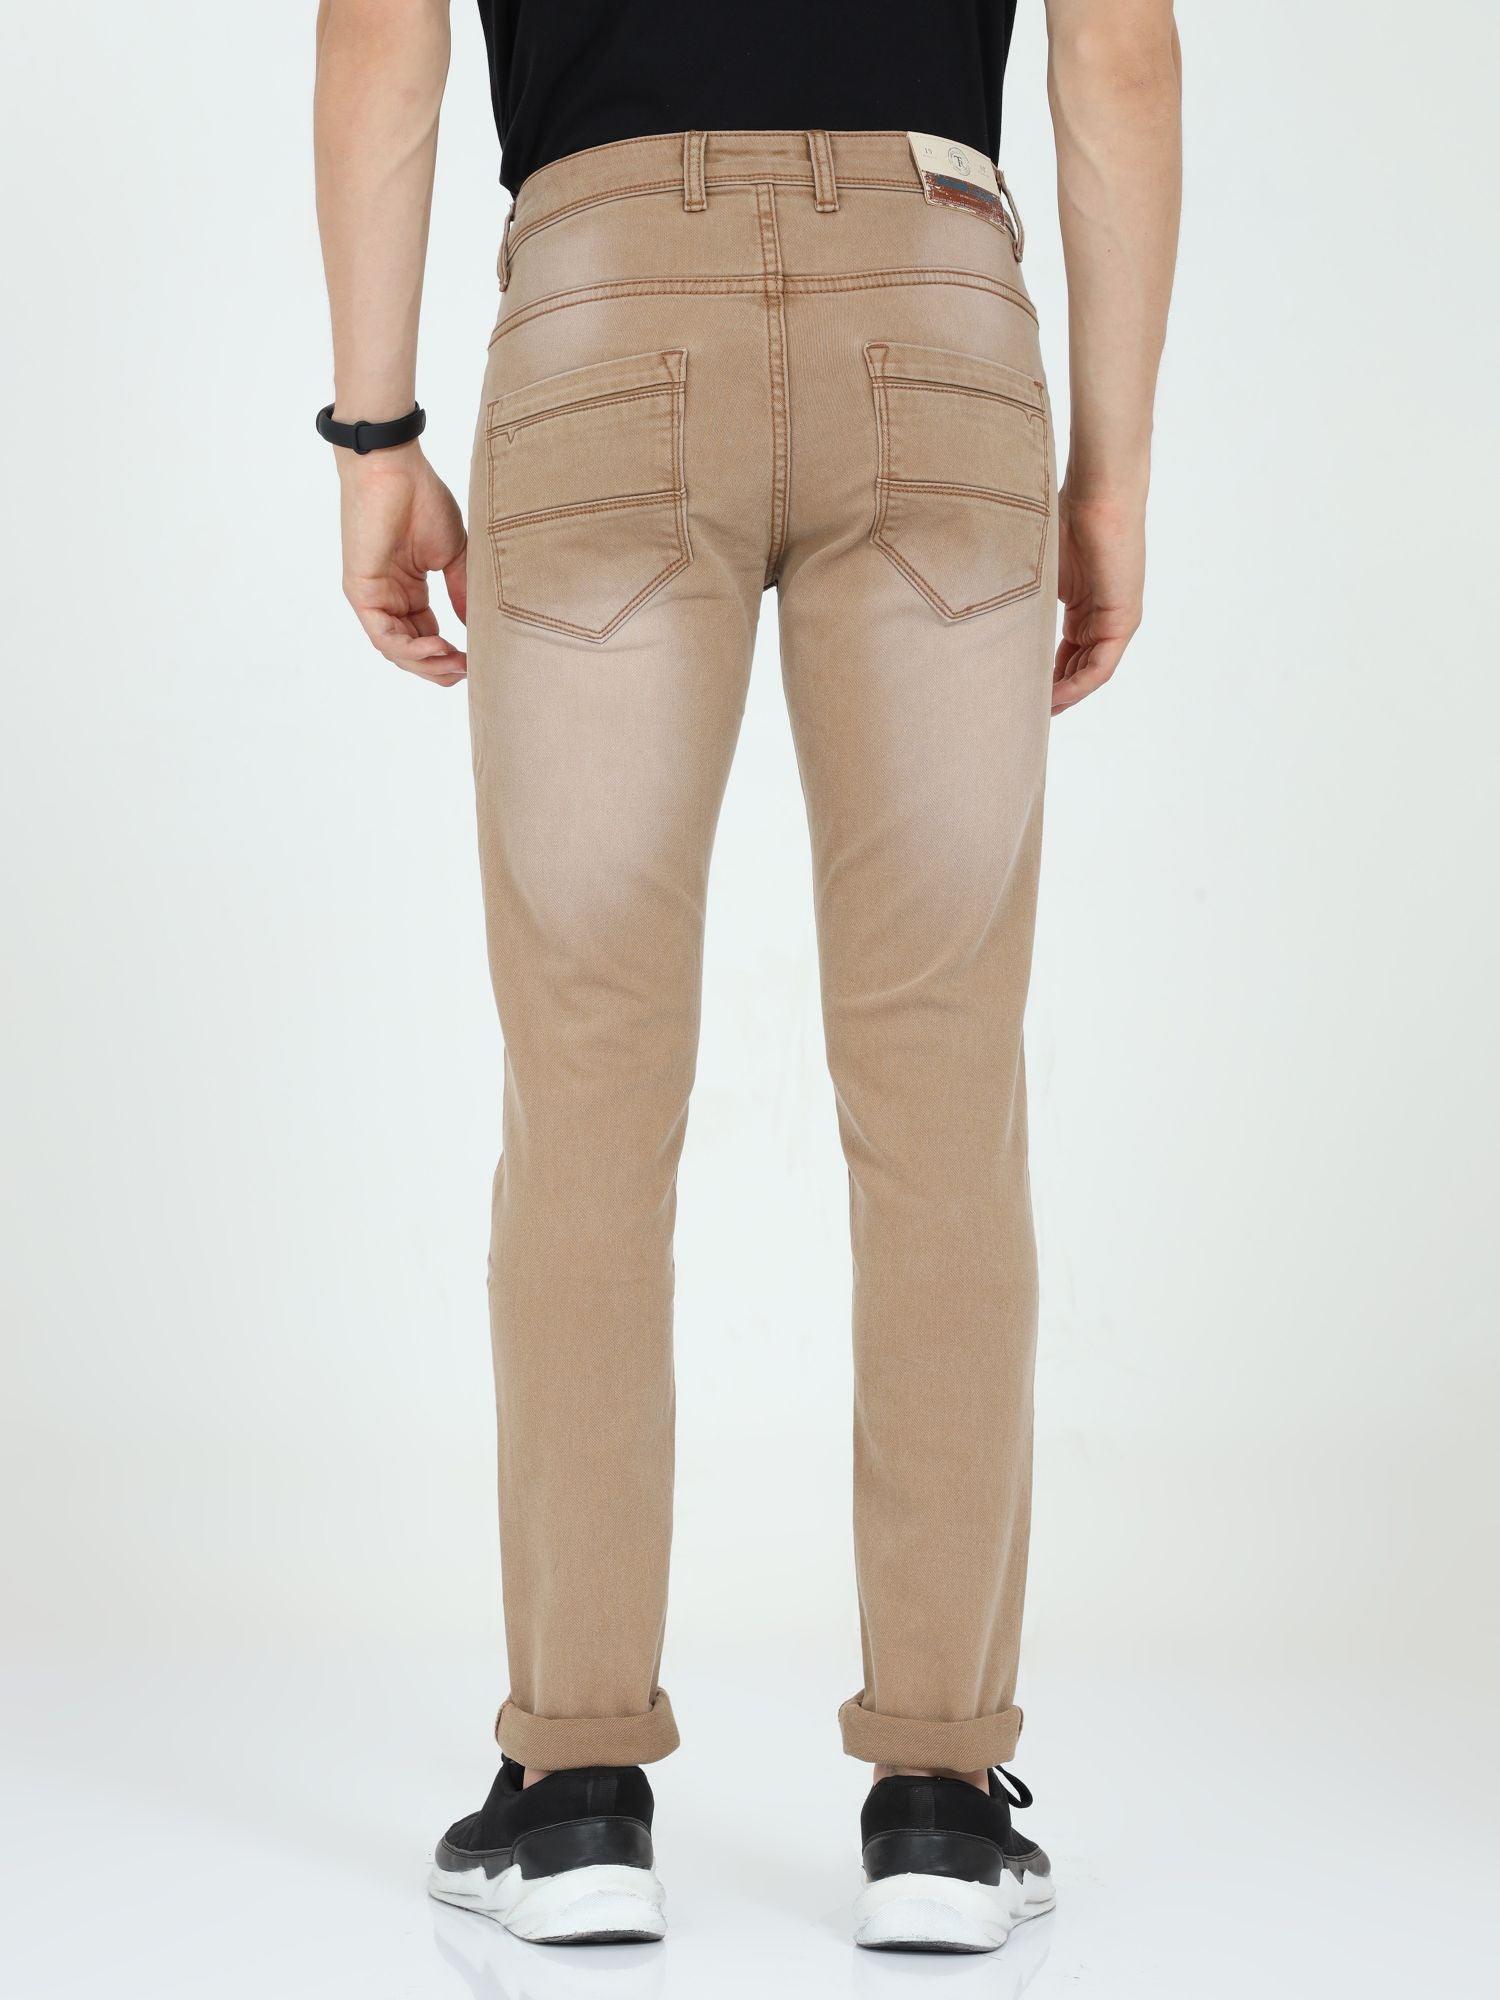 Men's Slim Fit Jeans - Khaki